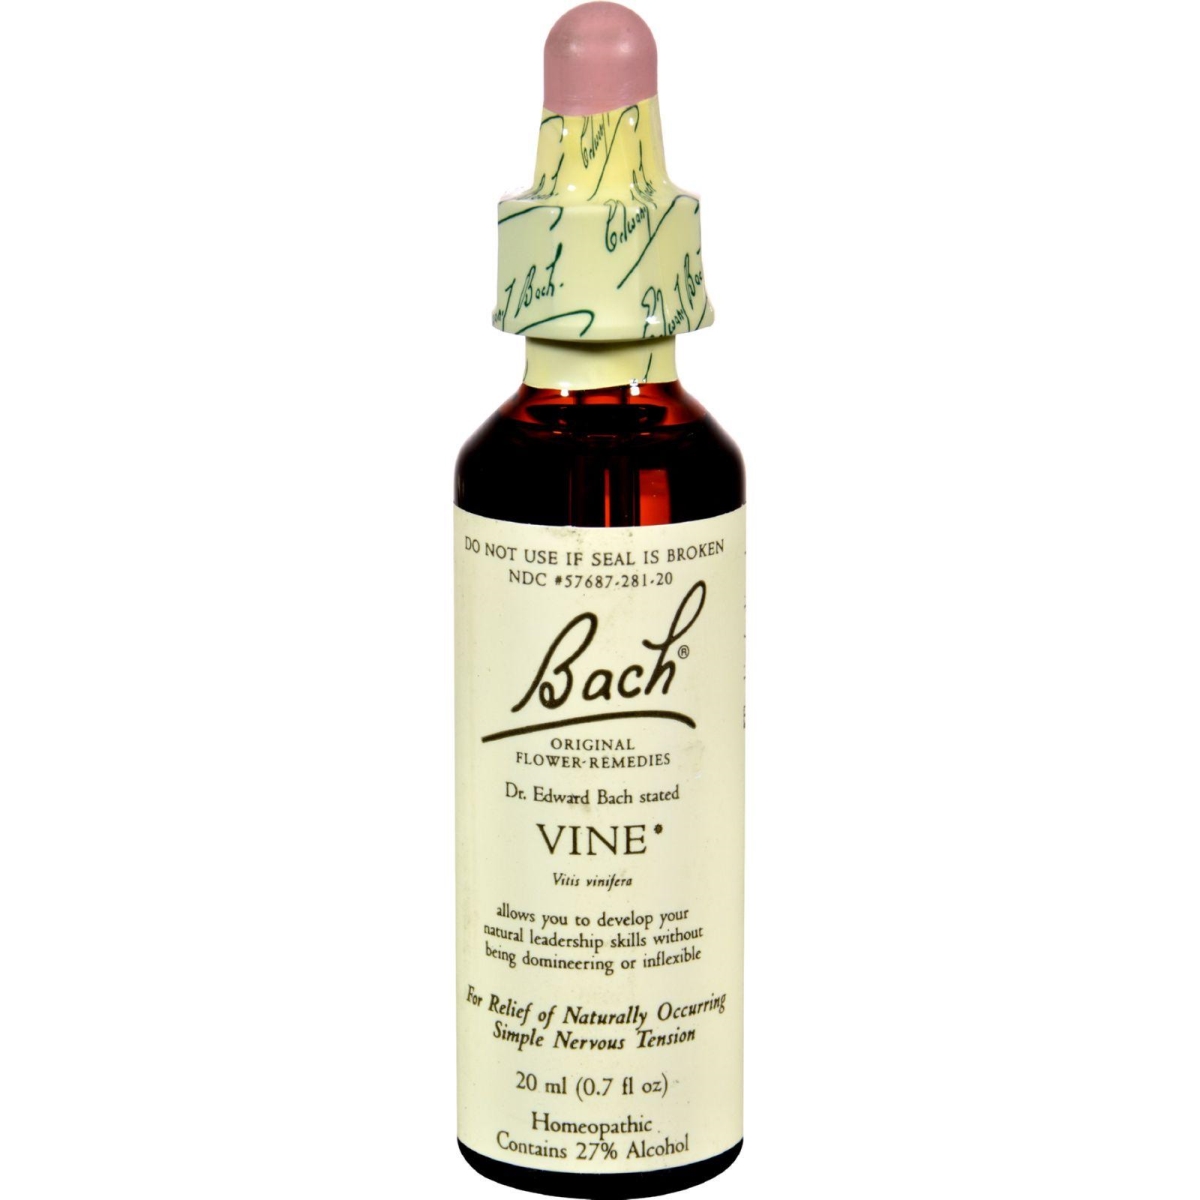 Hg0233981 0.7 Fl Oz Flower Remedies Essence, Vine